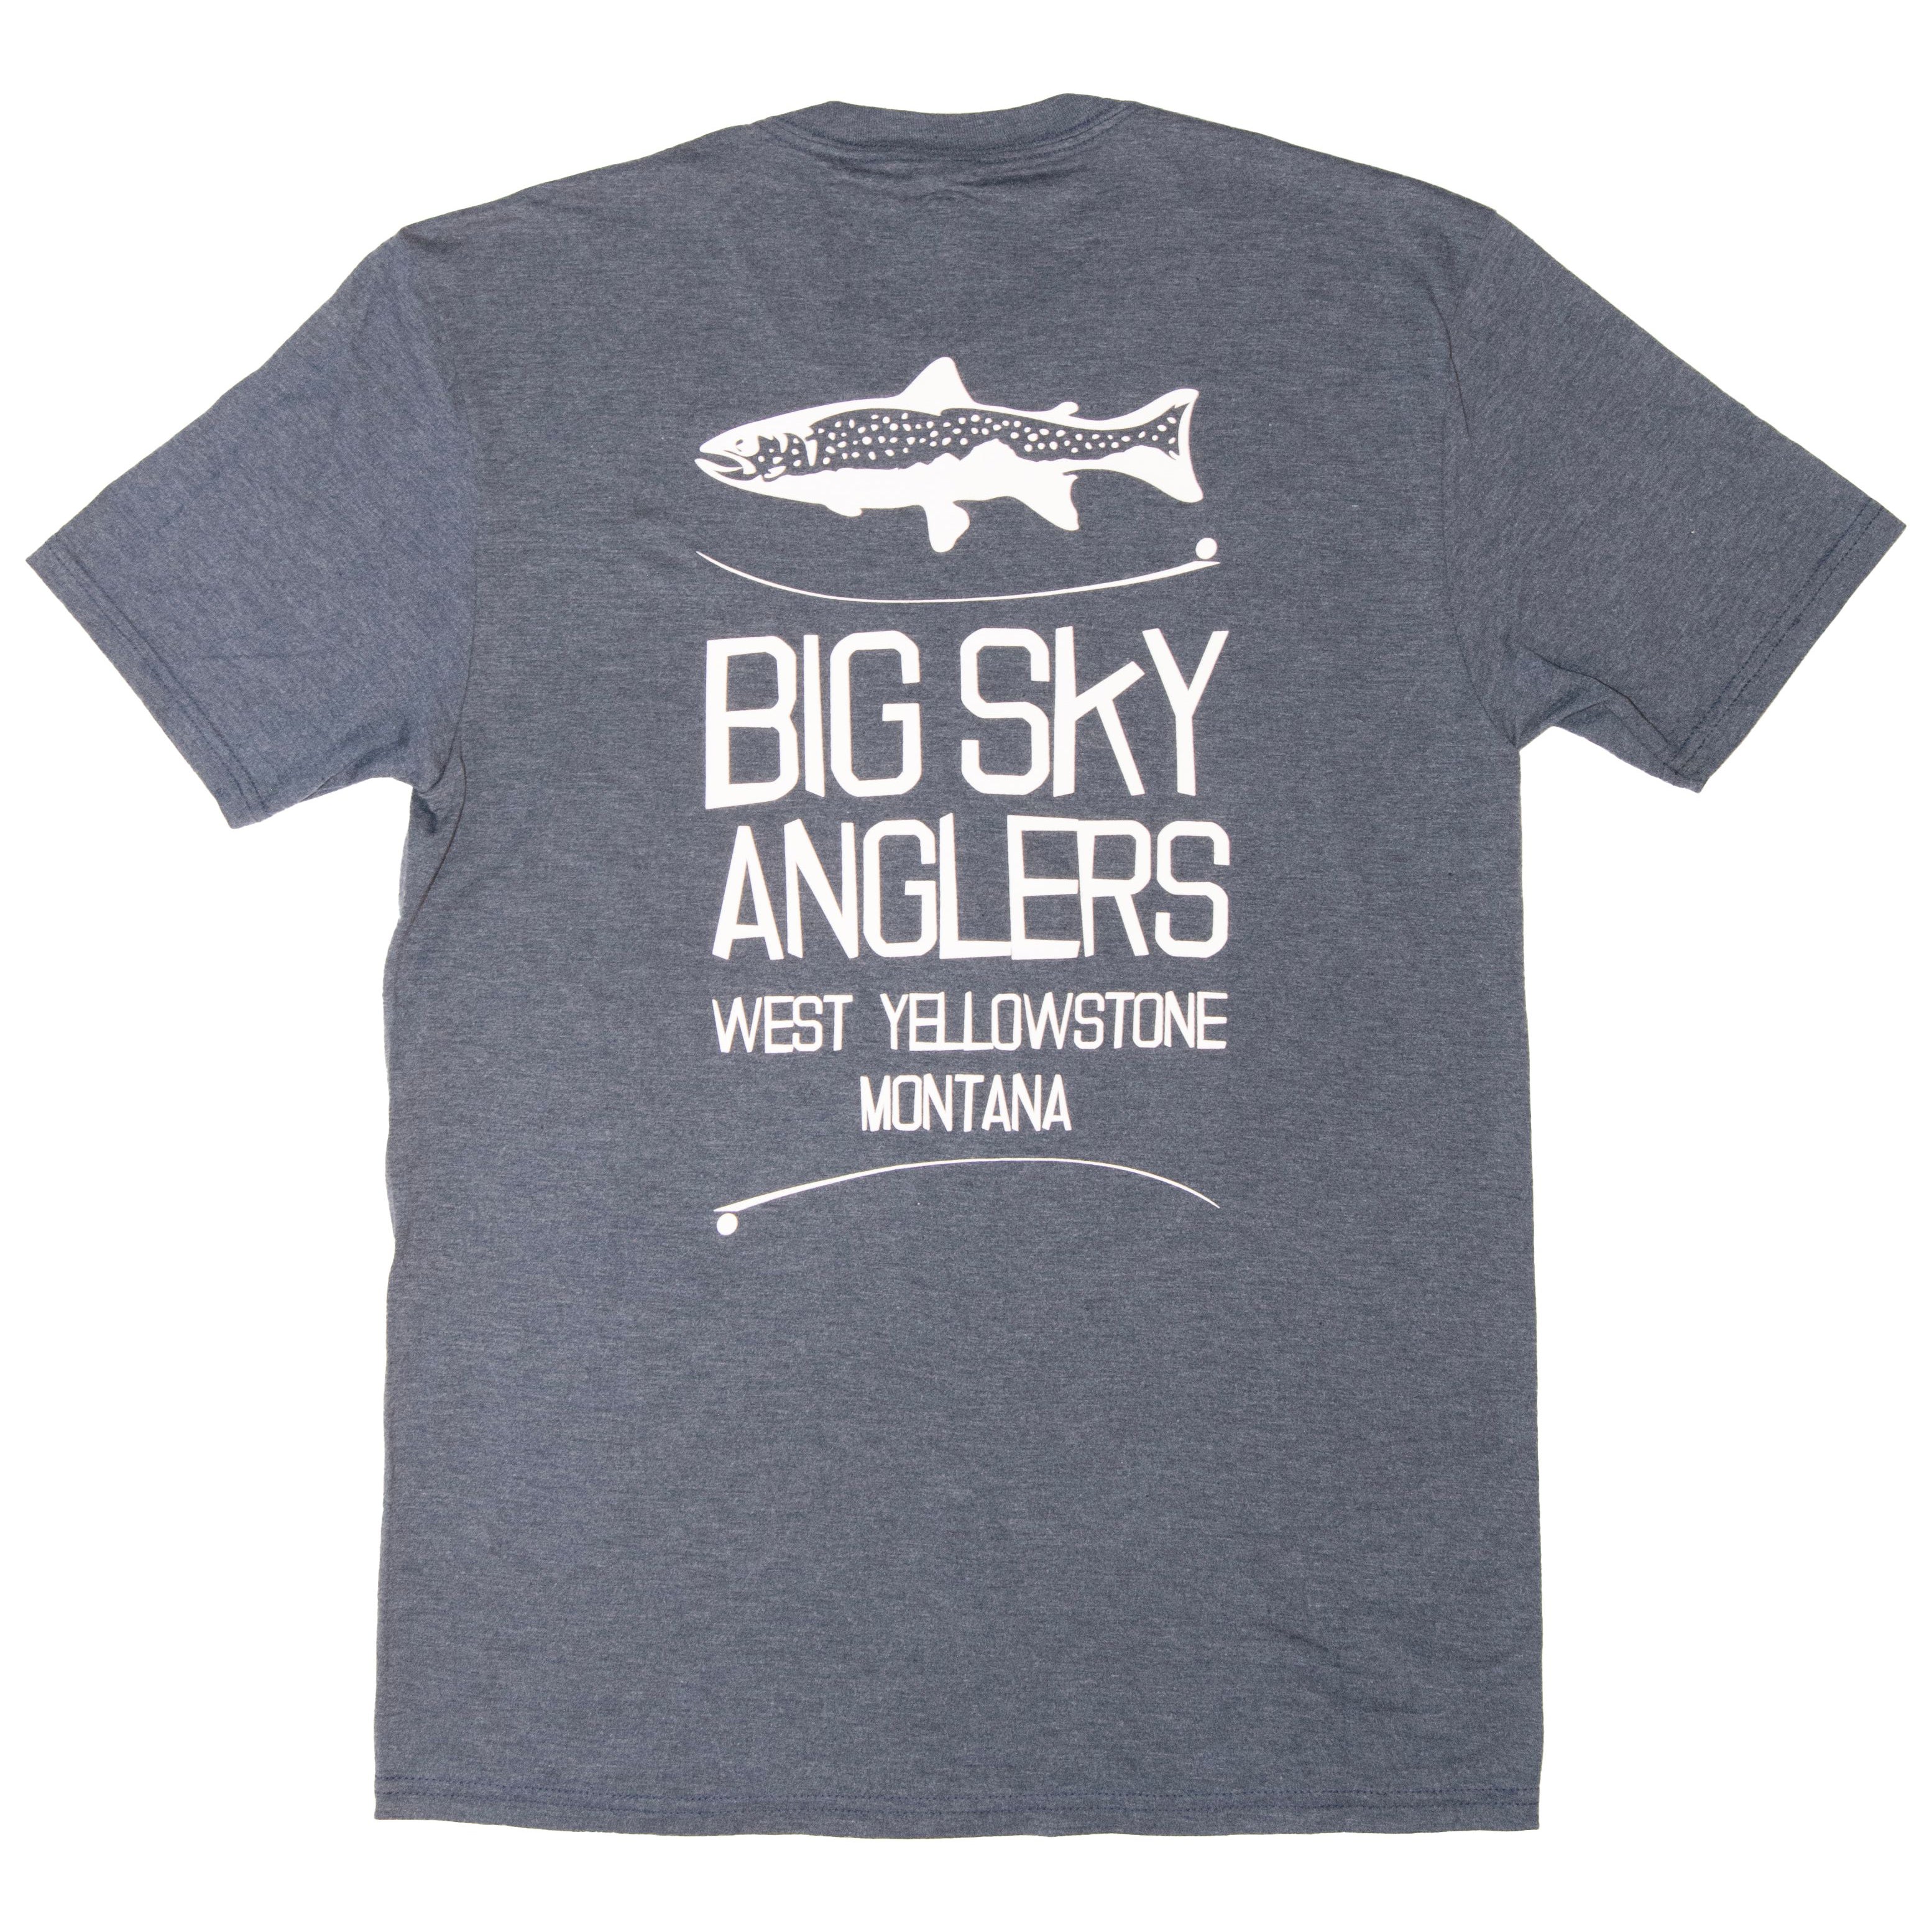 Big Lebowski Whitey T Shirt - Blue - The Missoulian Angler Fly Shop